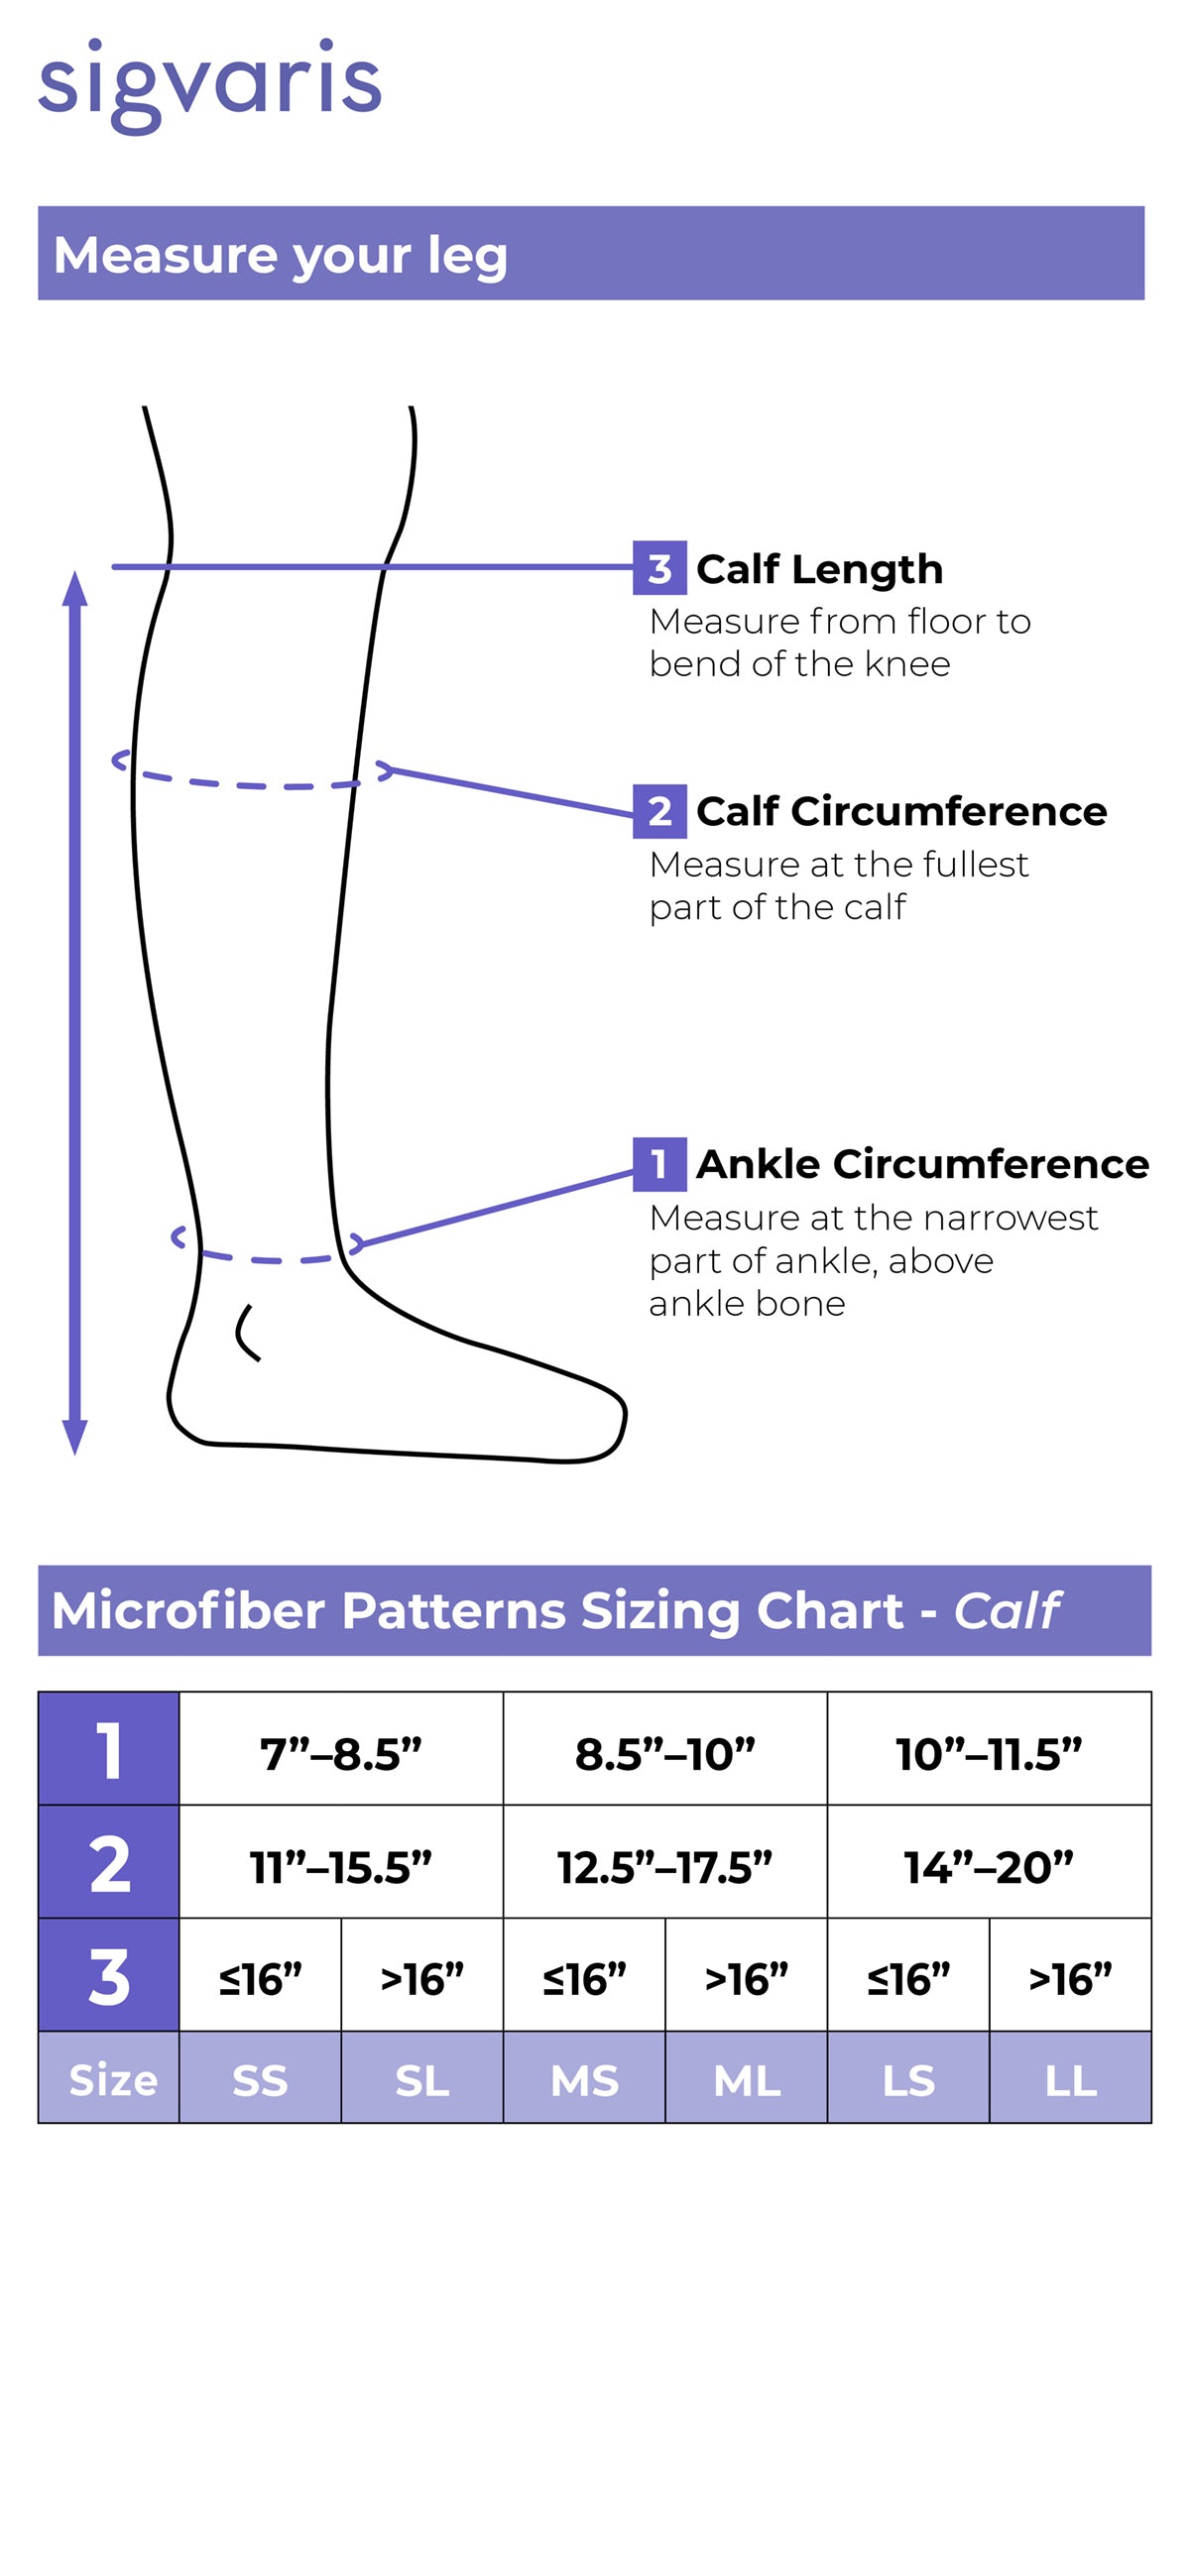 Men's Style Microfiber Patterns Calf